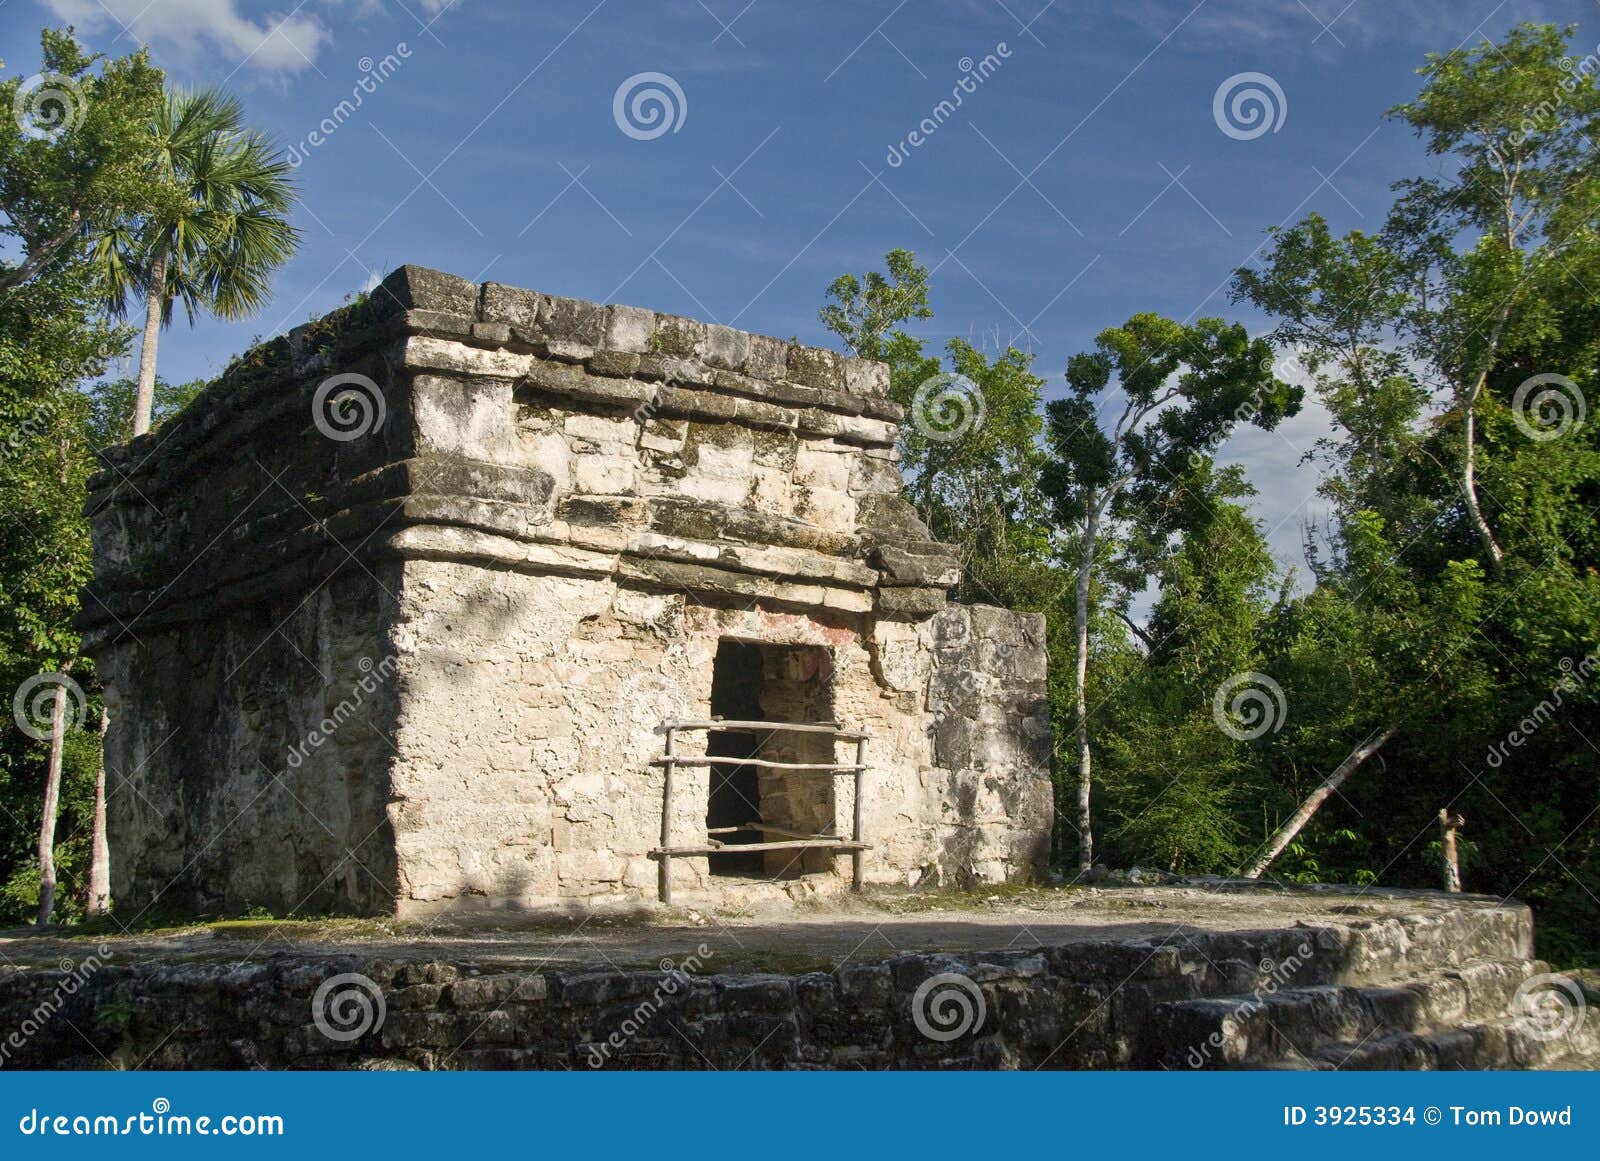 mayan ruins at san gervasio